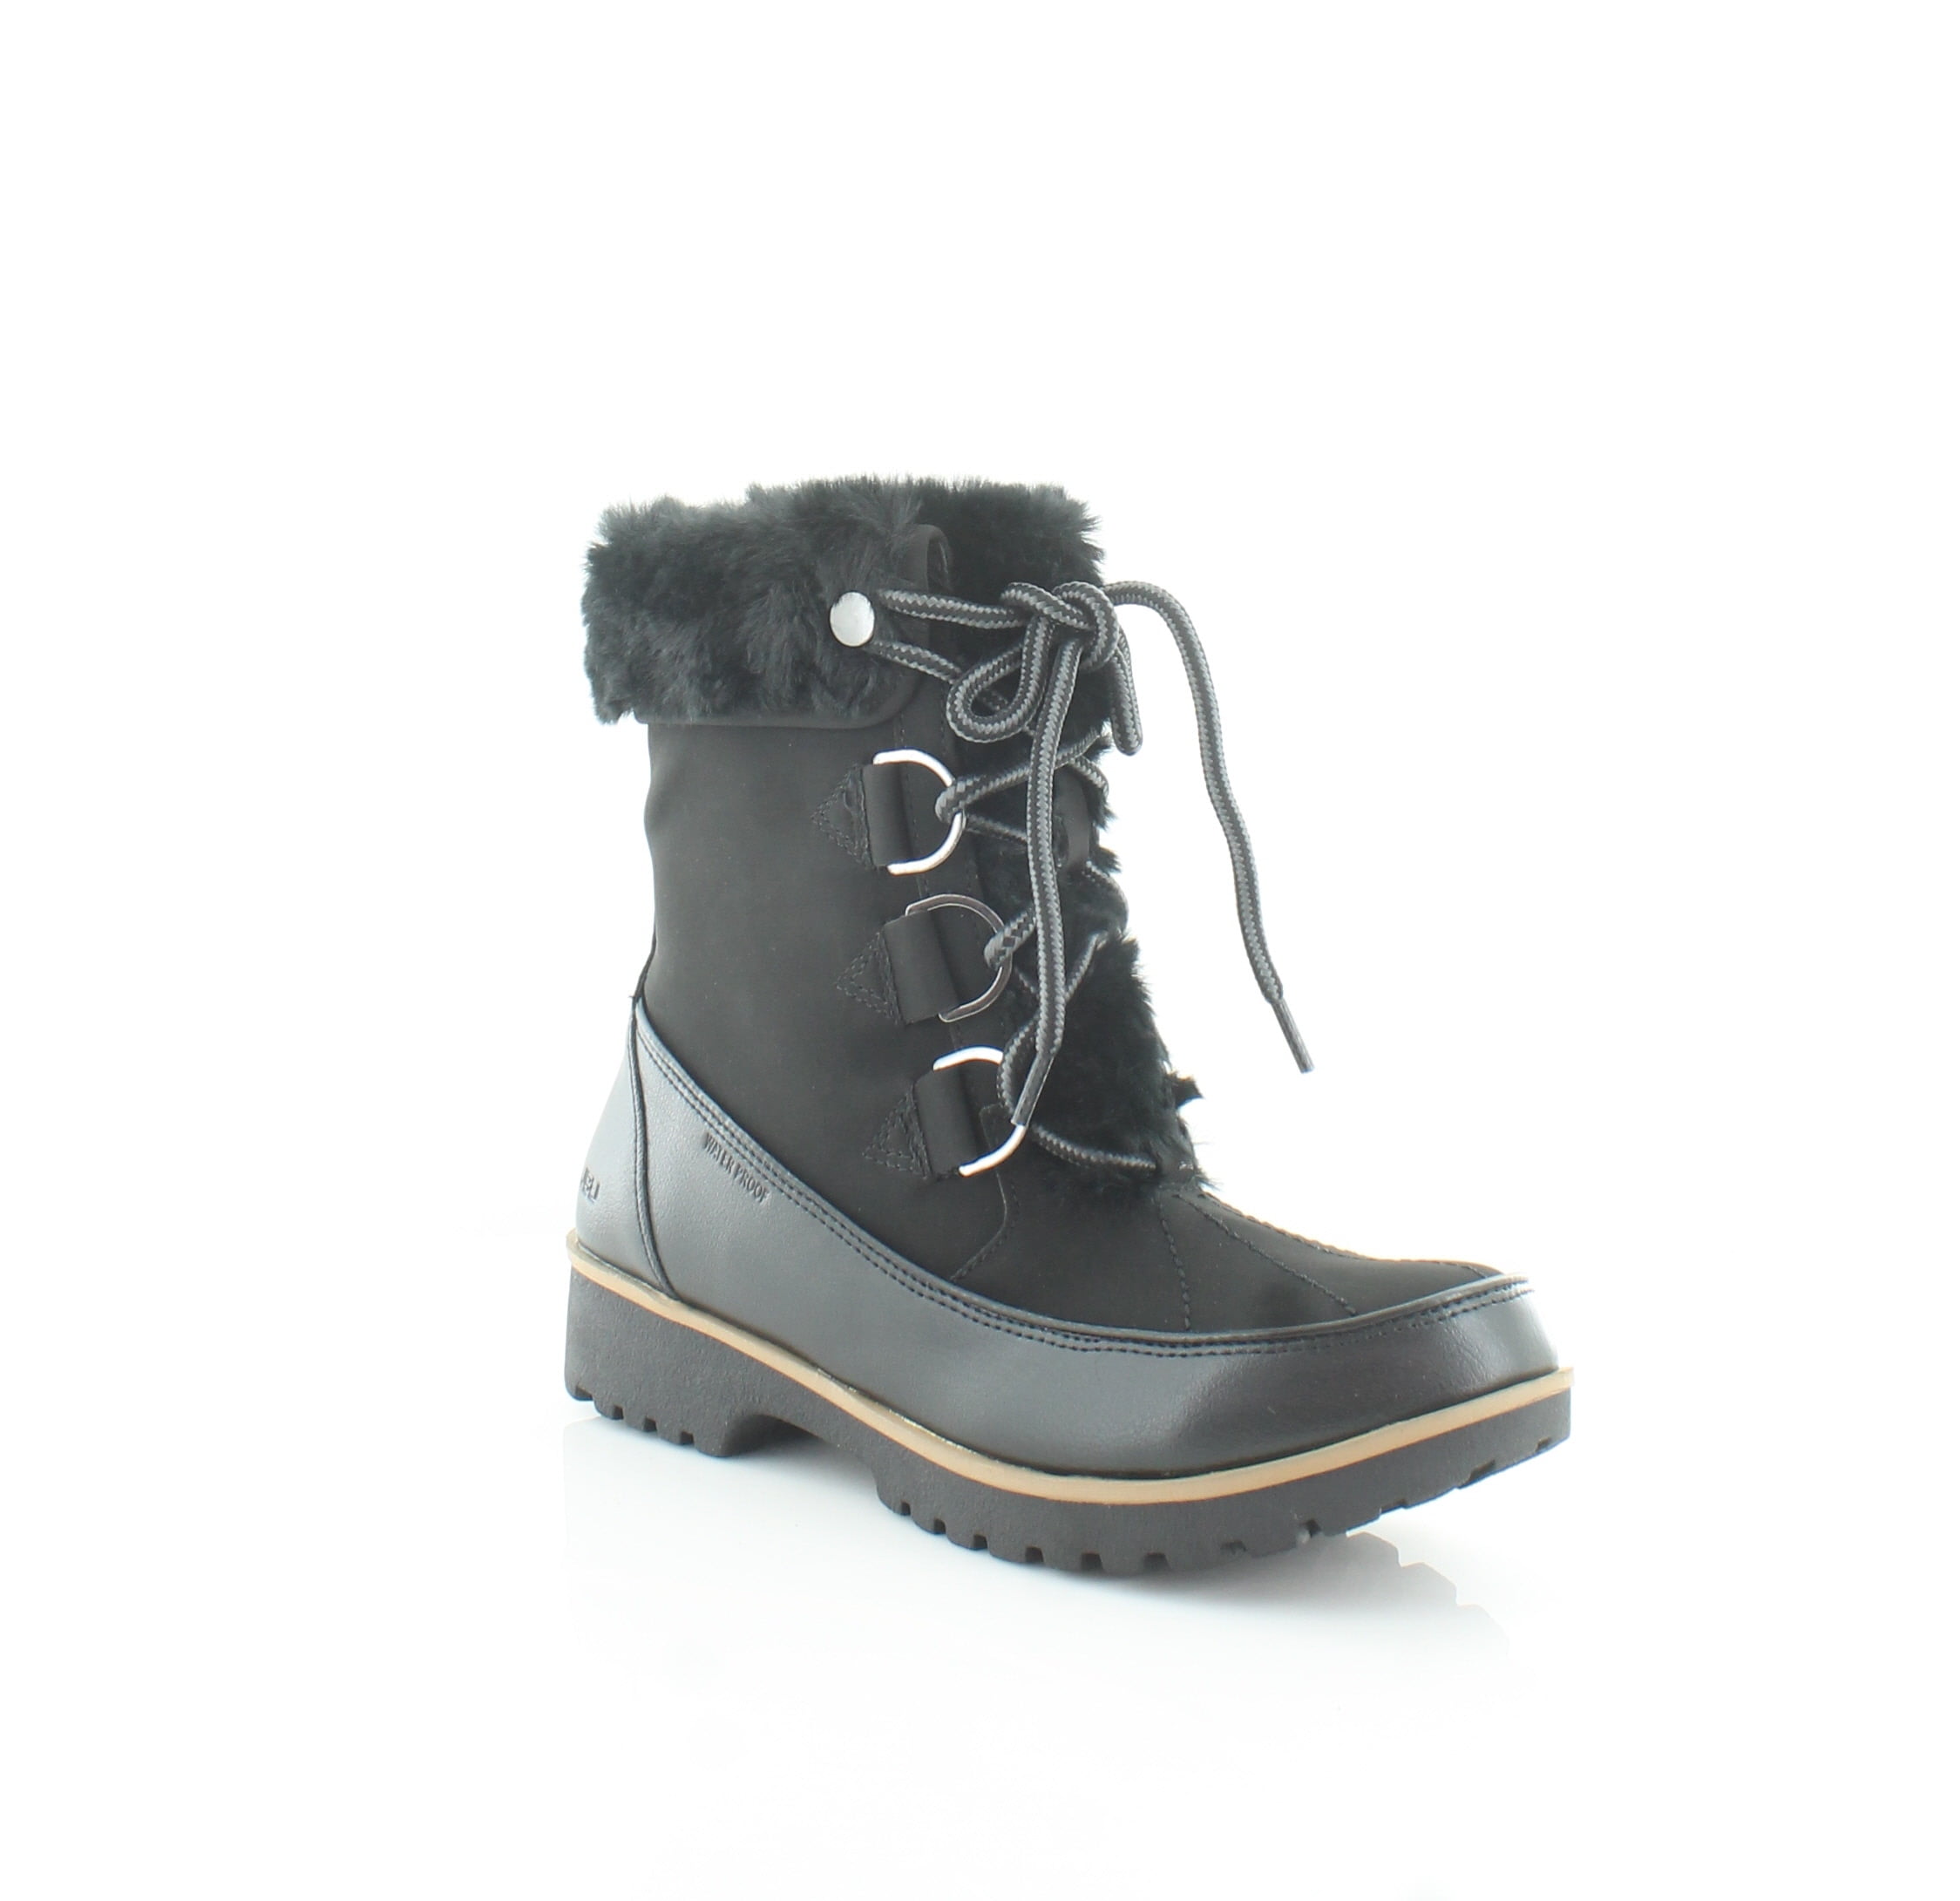 JBU by Jambu Northgate Women's Boots Black Size 6 M - Walmart.com